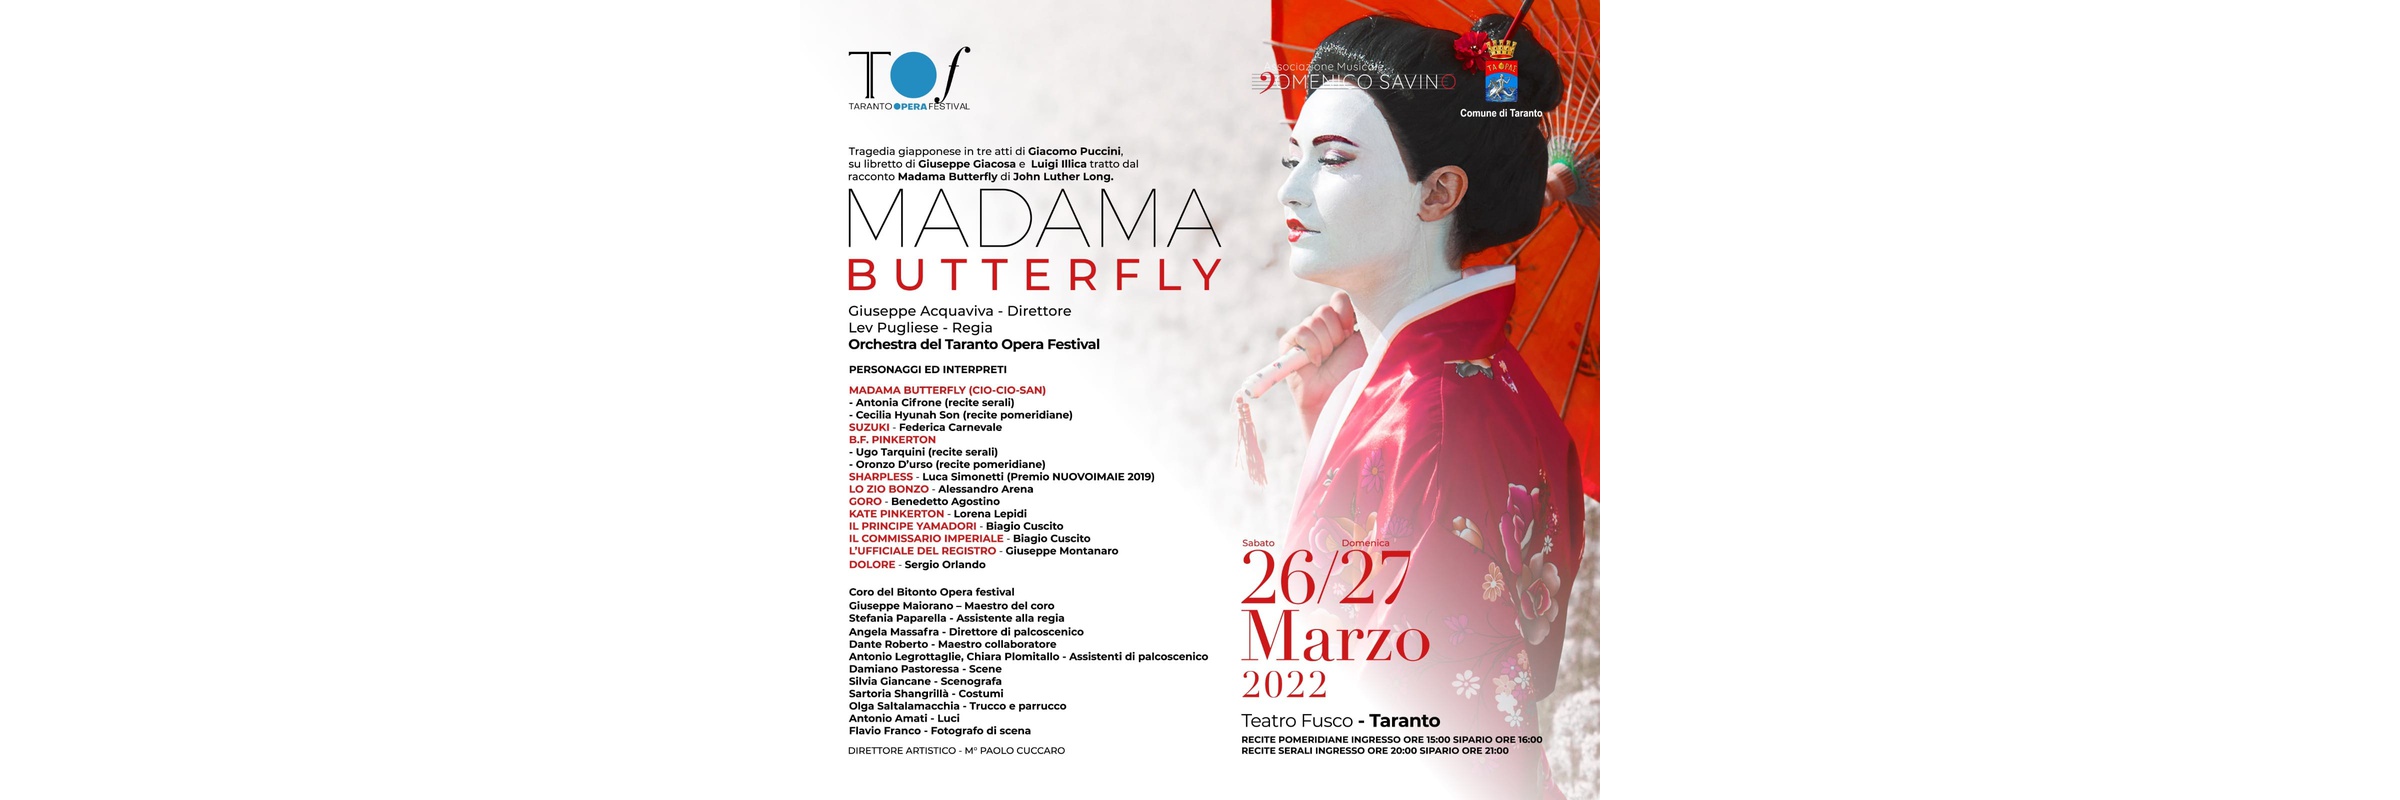 Musical Association Domenico Savino - Madame Butterfly/Madama Butterfly